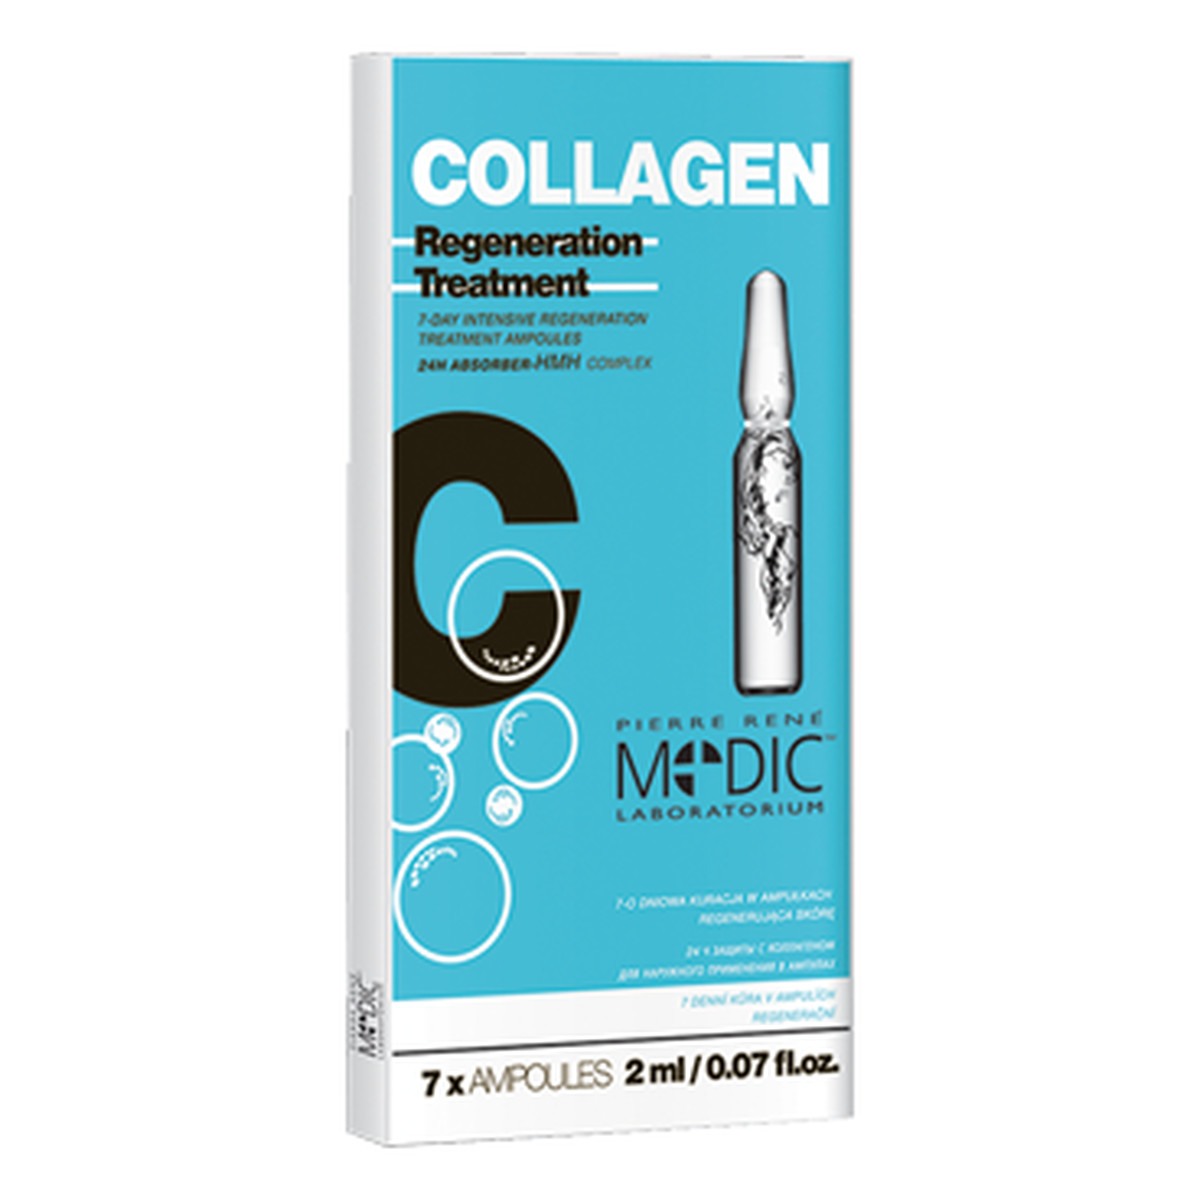 Pierre Rene Collagen Regeneration Treatment Medic Laboratorium Ampułki Collagenowe Odmładzające Do Skóry 14ml